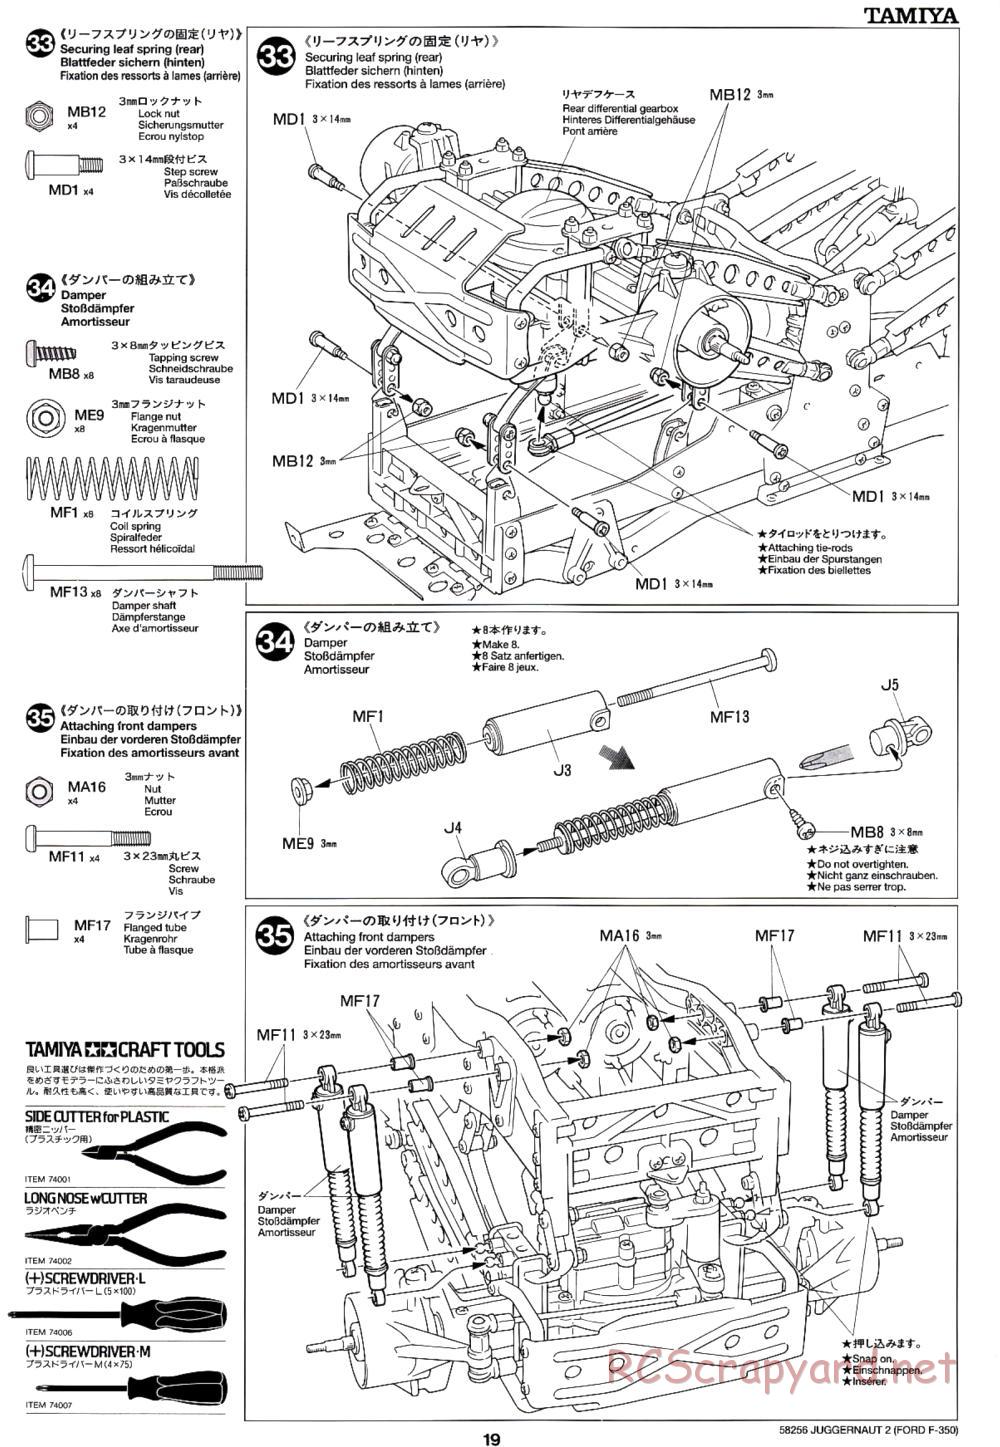 Tamiya - Juggernaut 2 Chassis - Manual - Page 19